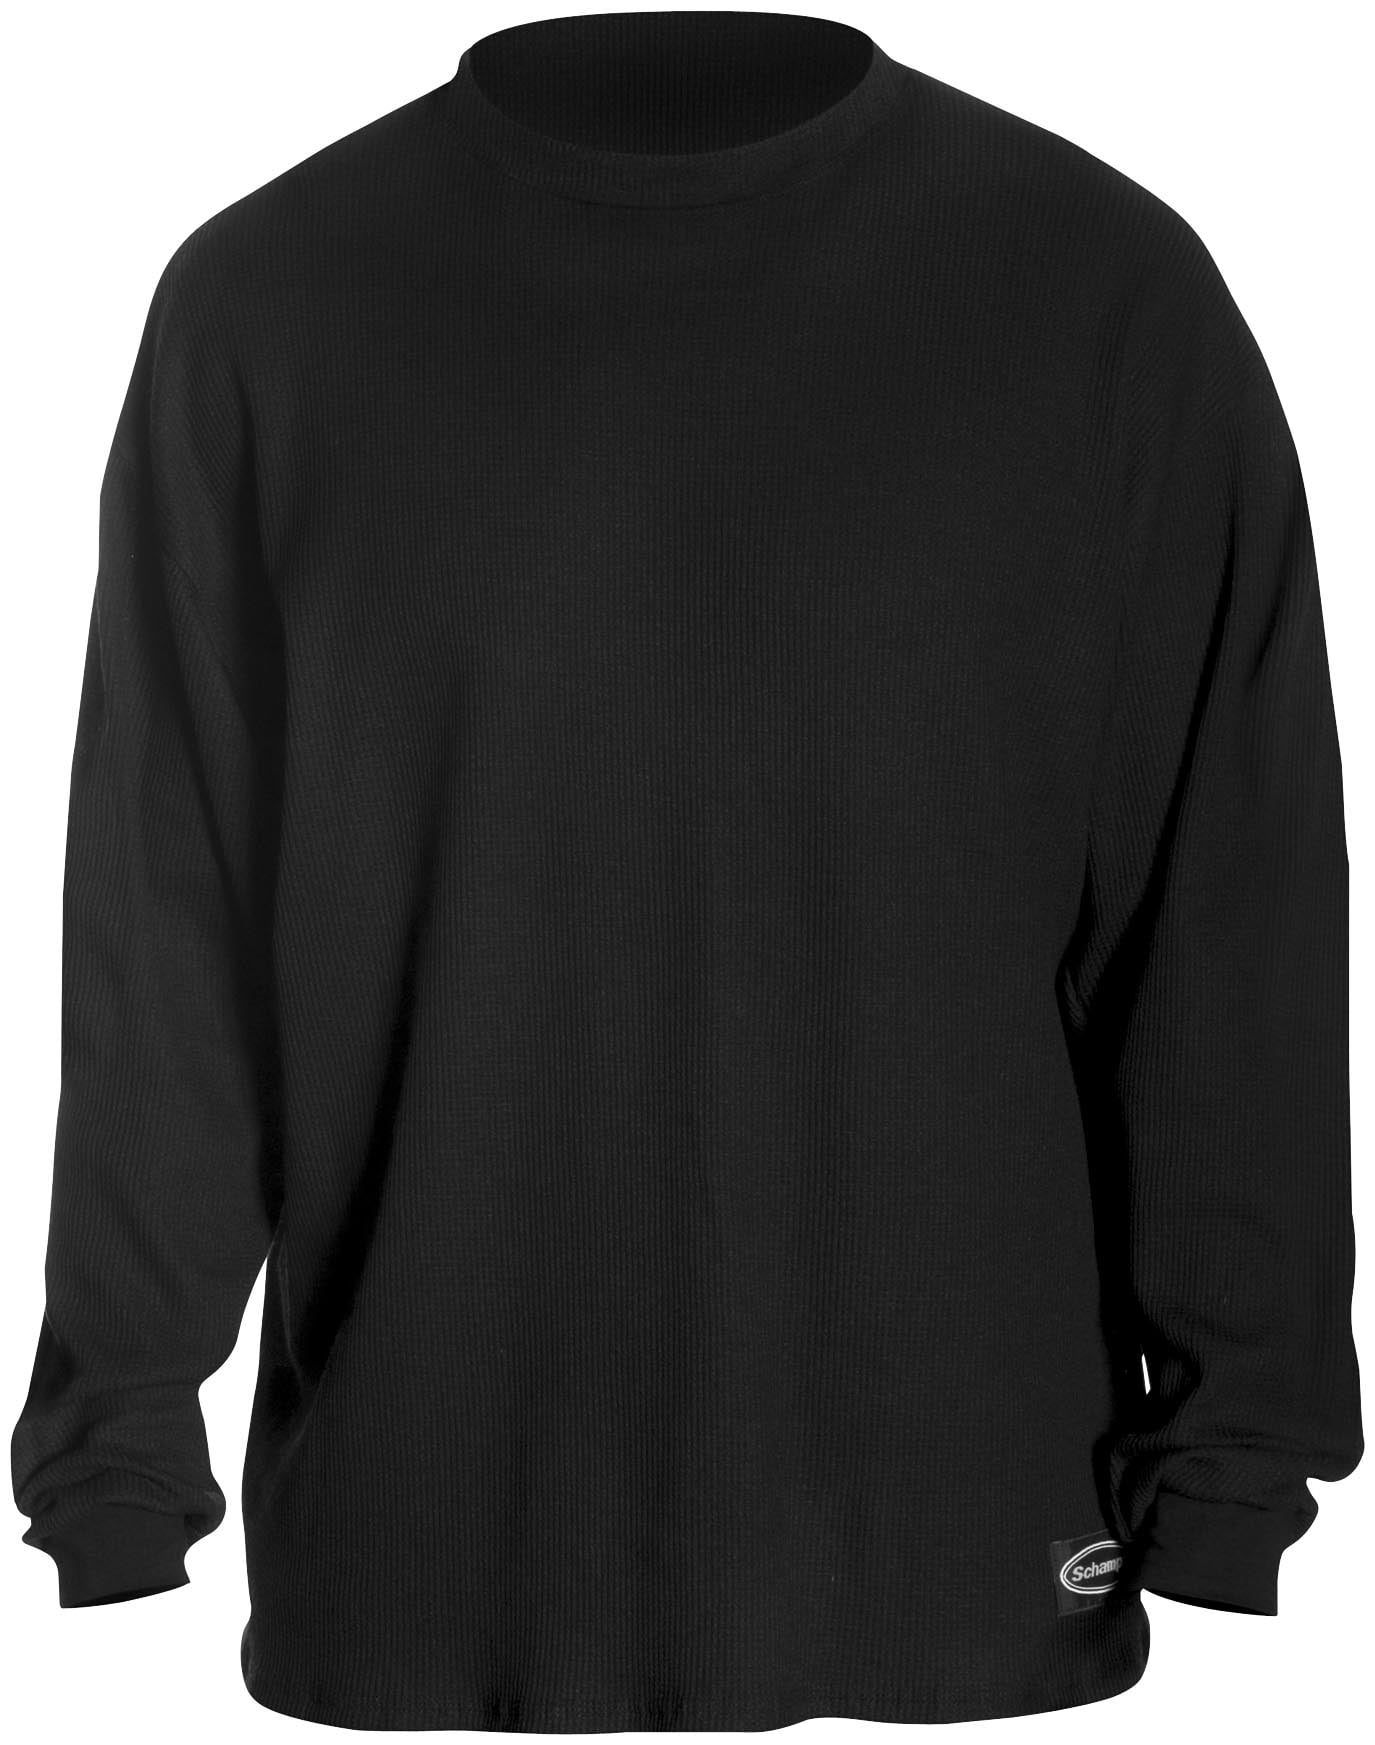 Schampa Thermal Shirt X-Large/Black